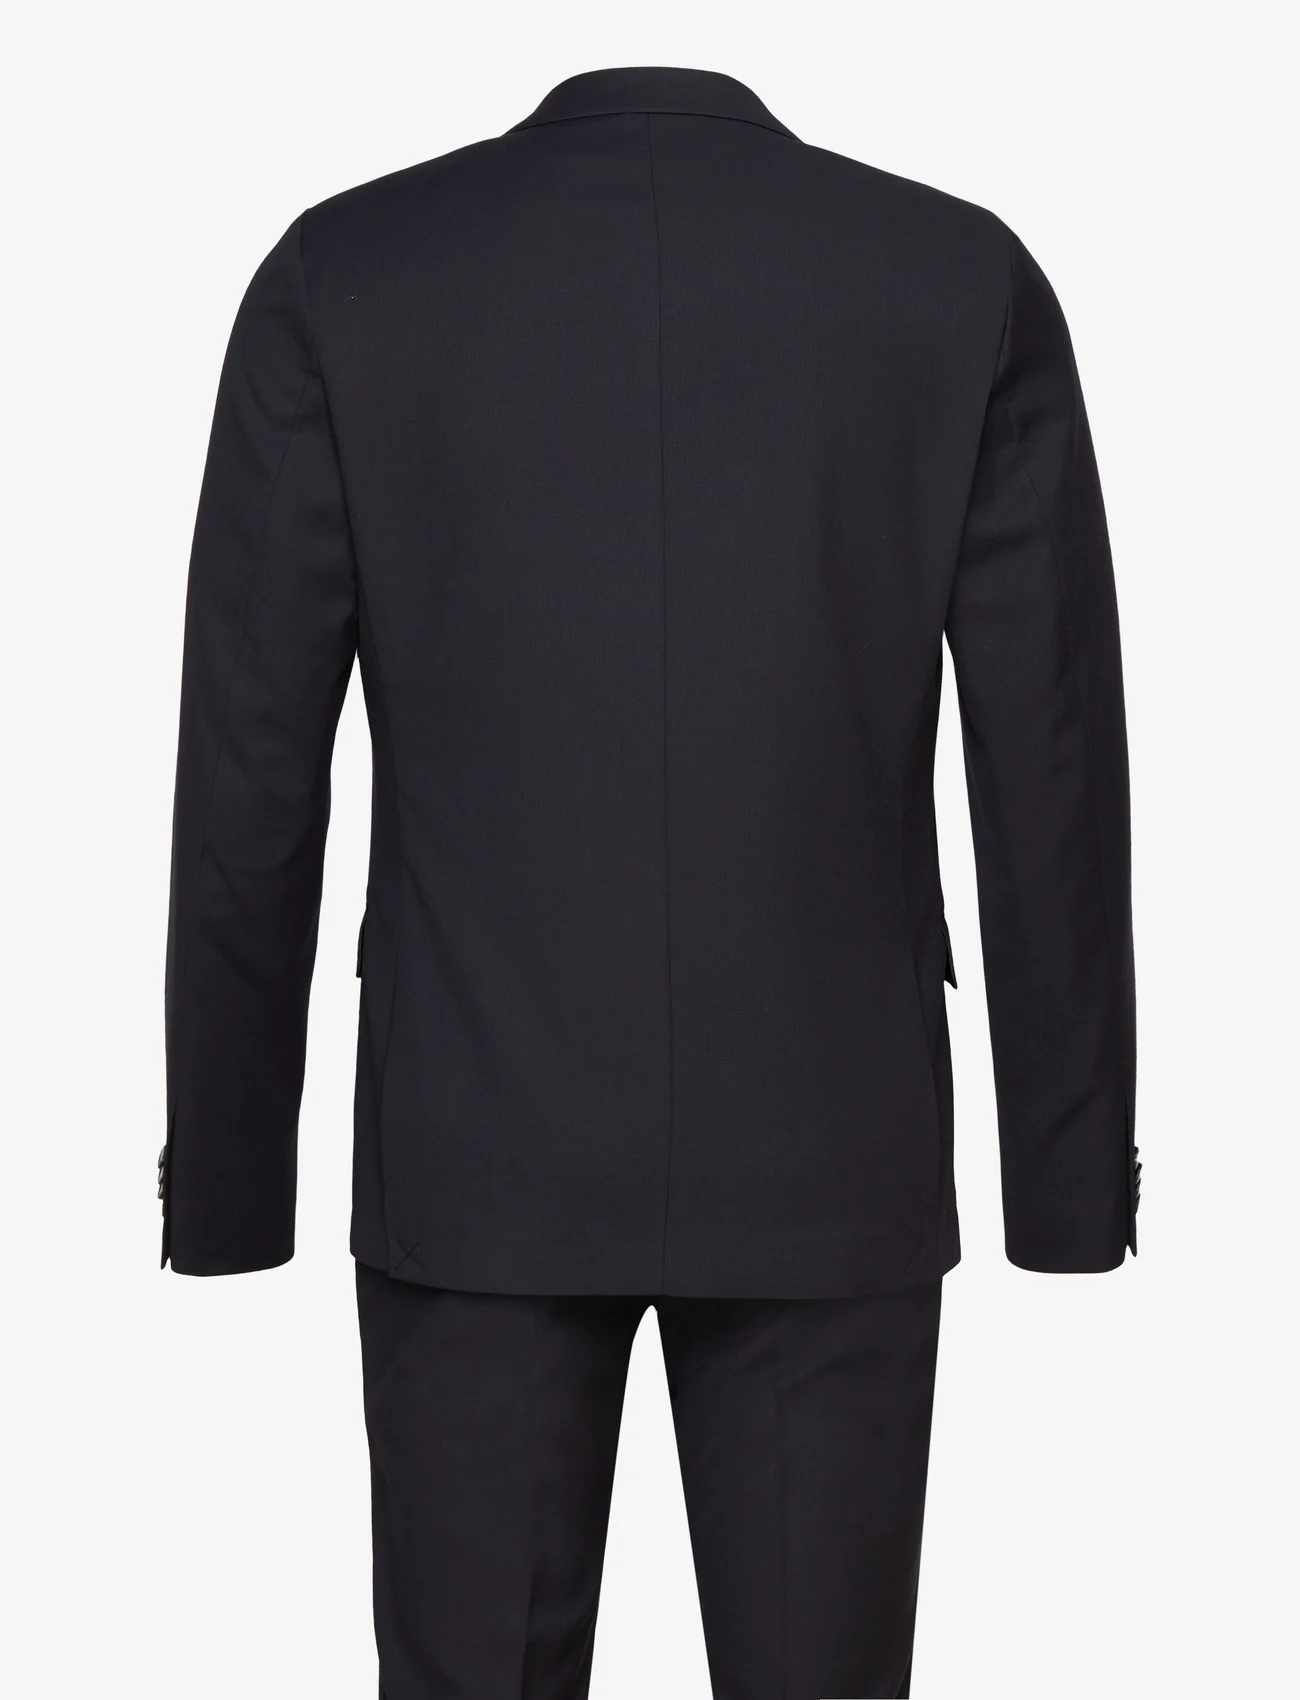 Bruun & Stengade - BS Marin Slim Fit Suit Set - kombinezony dwurzędowe - black - 1